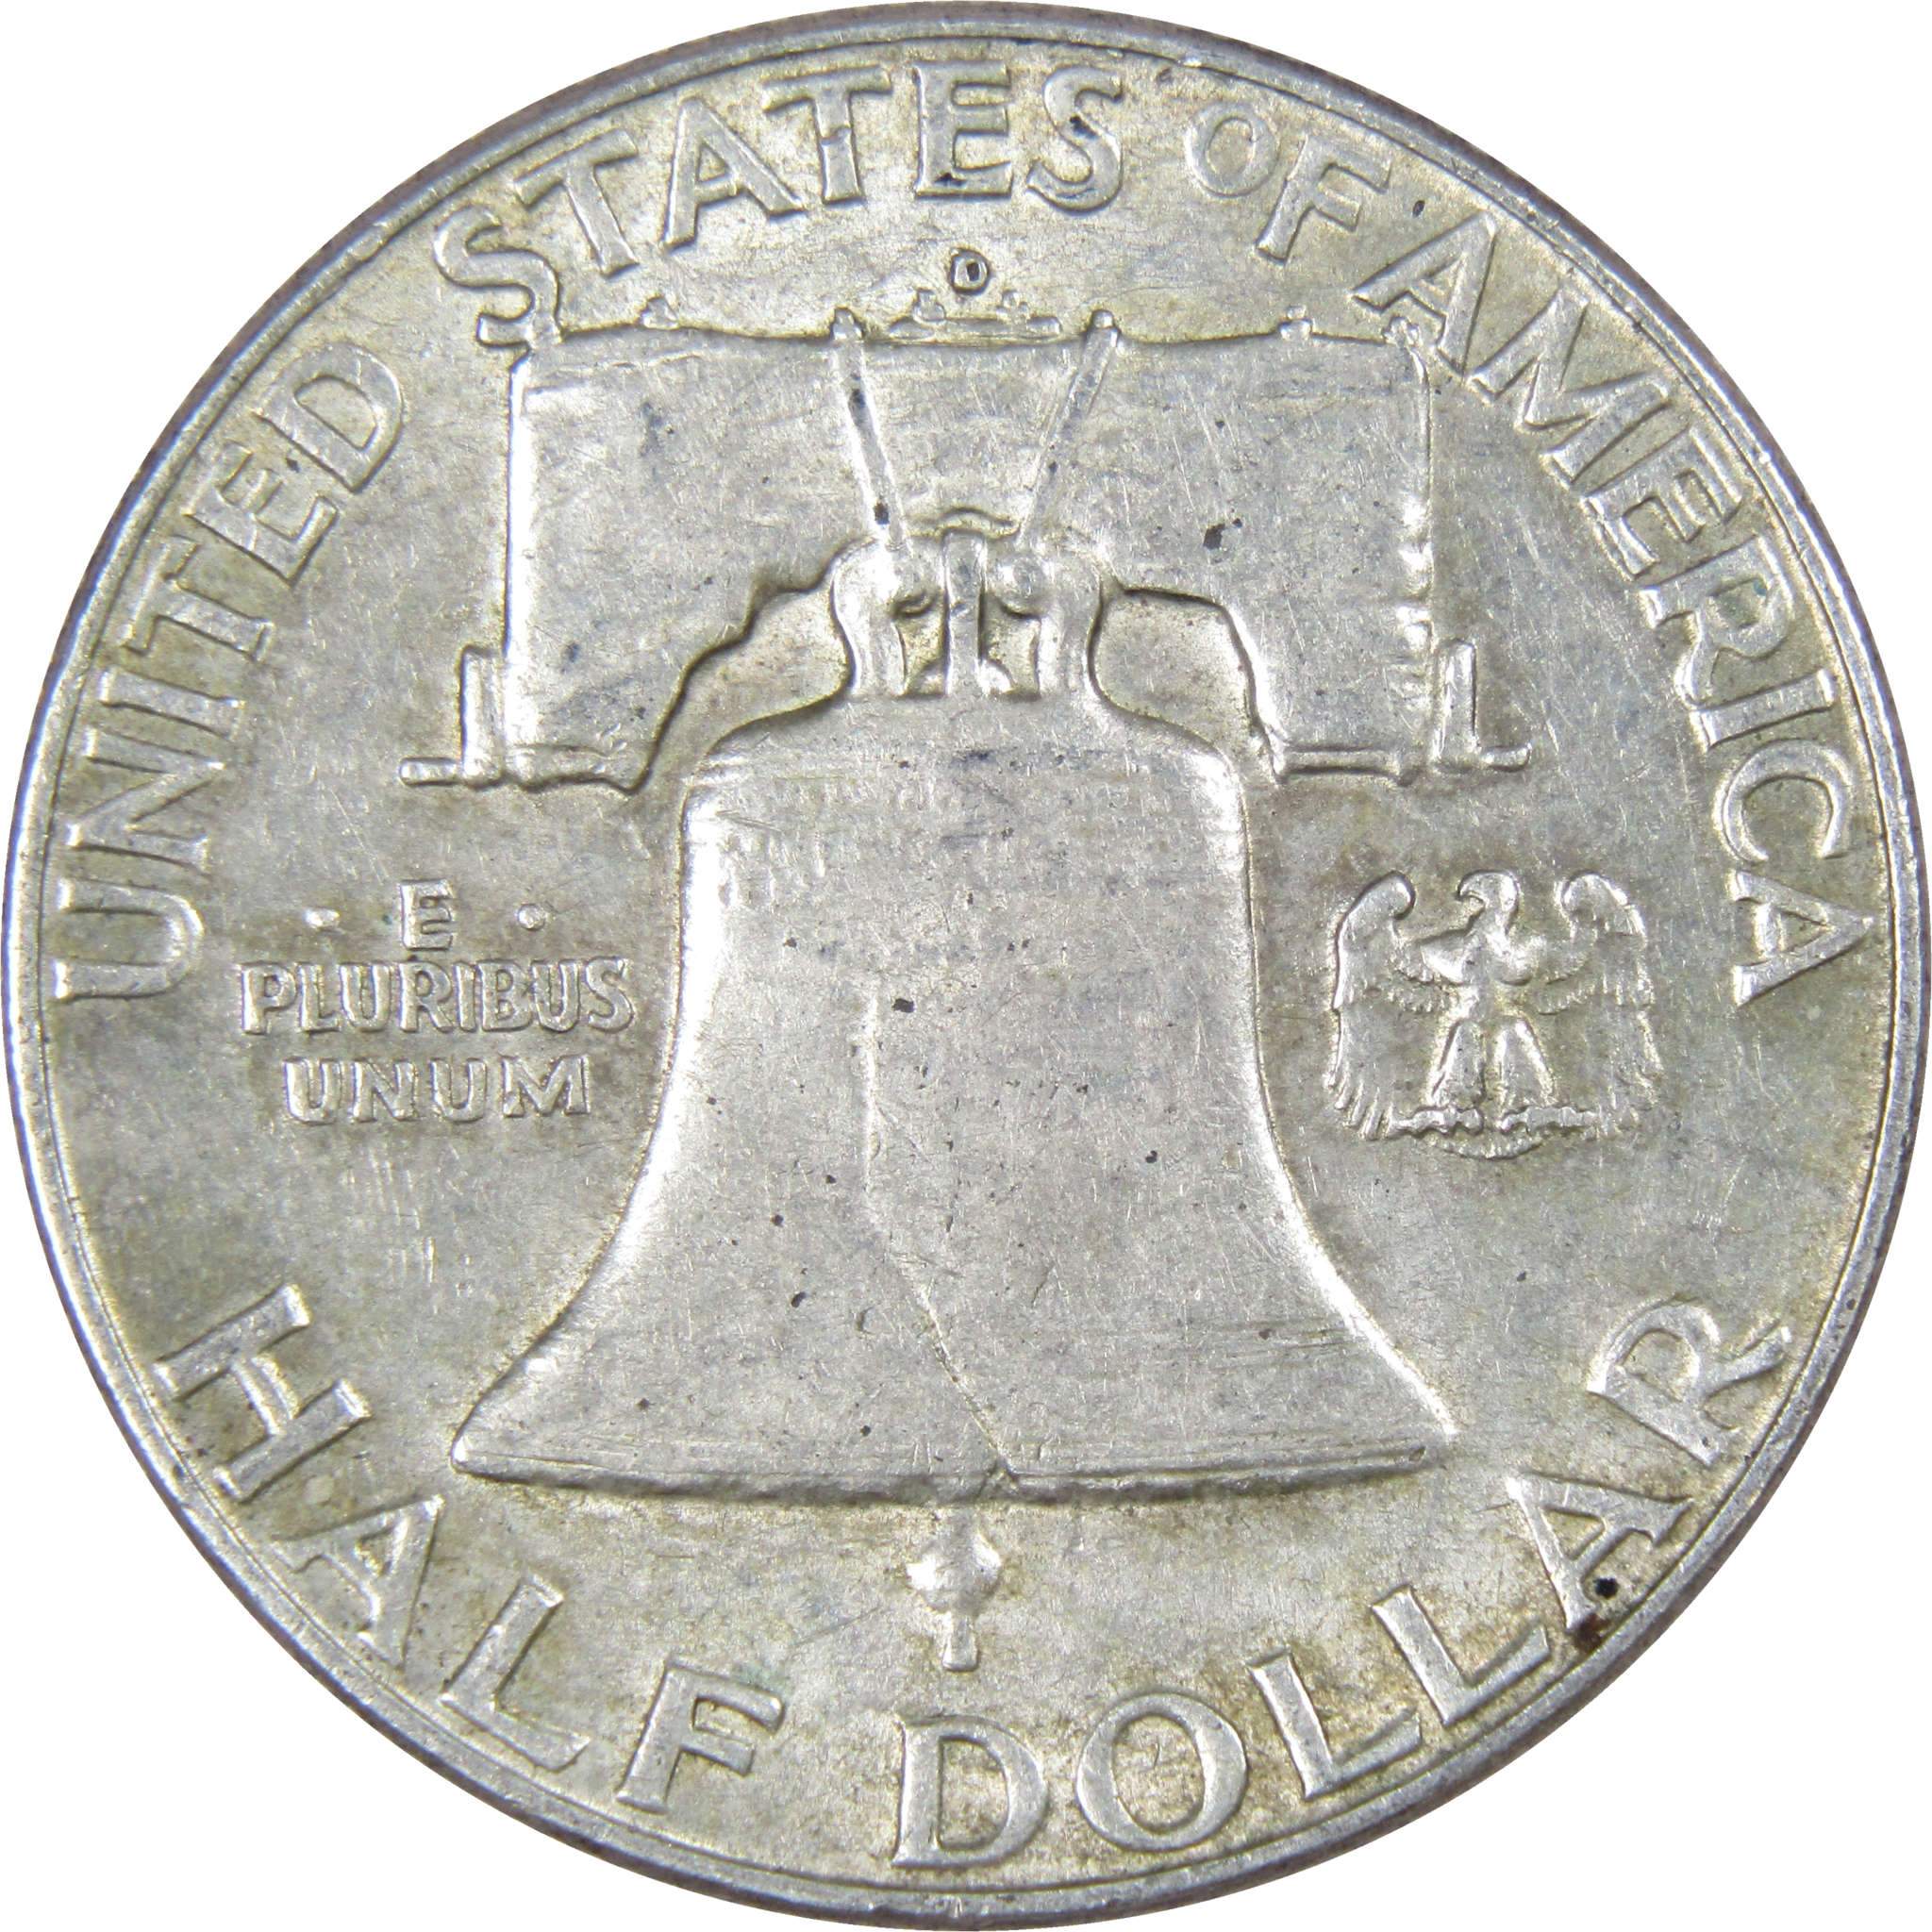 Franklin Half Dollar AG About Good Random Date 90% Silver 50c US Coin